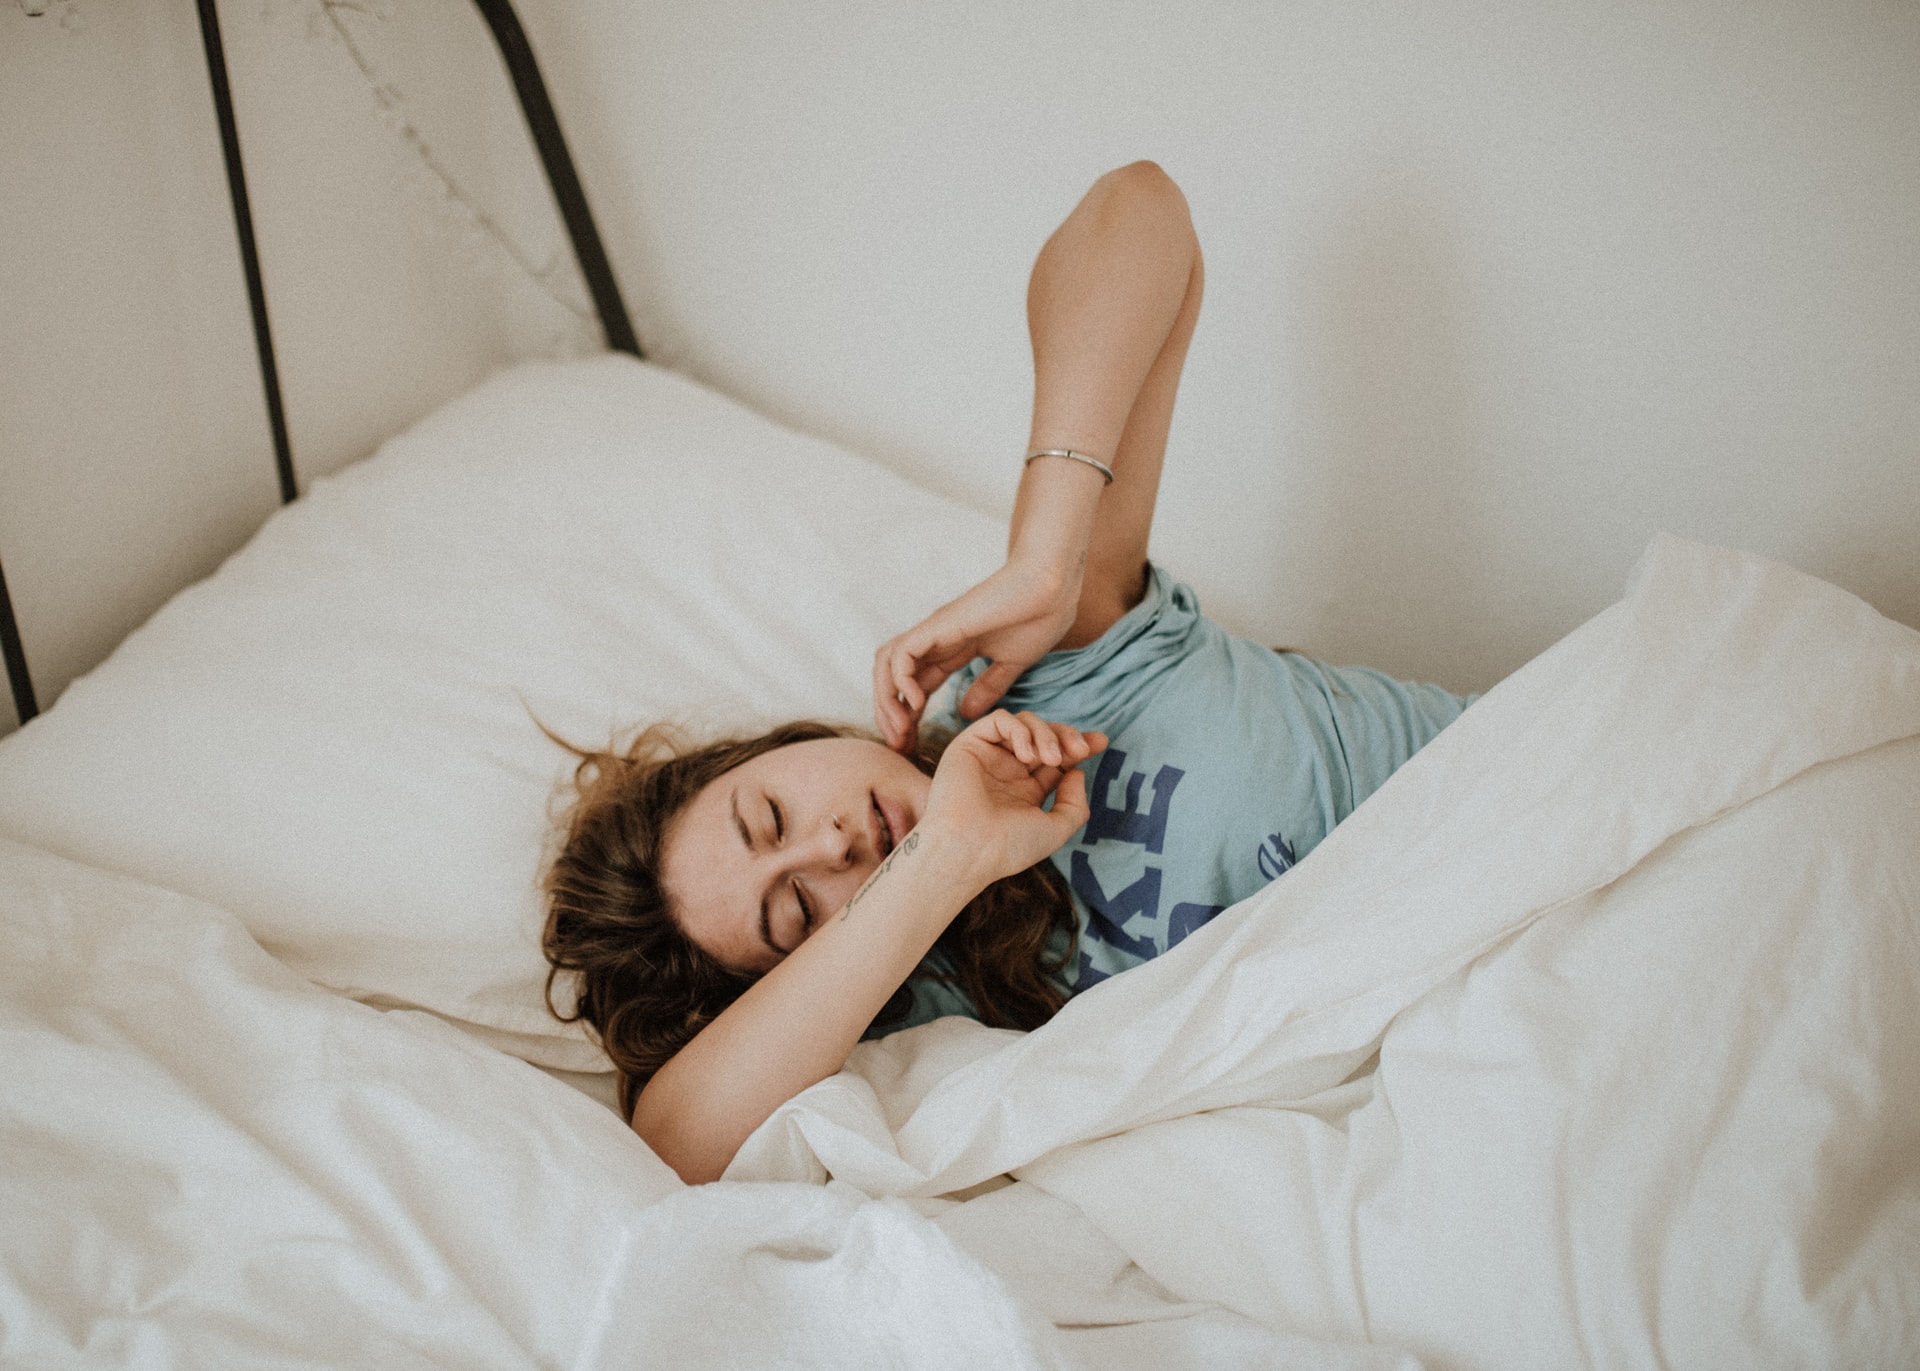 Hábitos para tener un excelente día: Despierta temprano